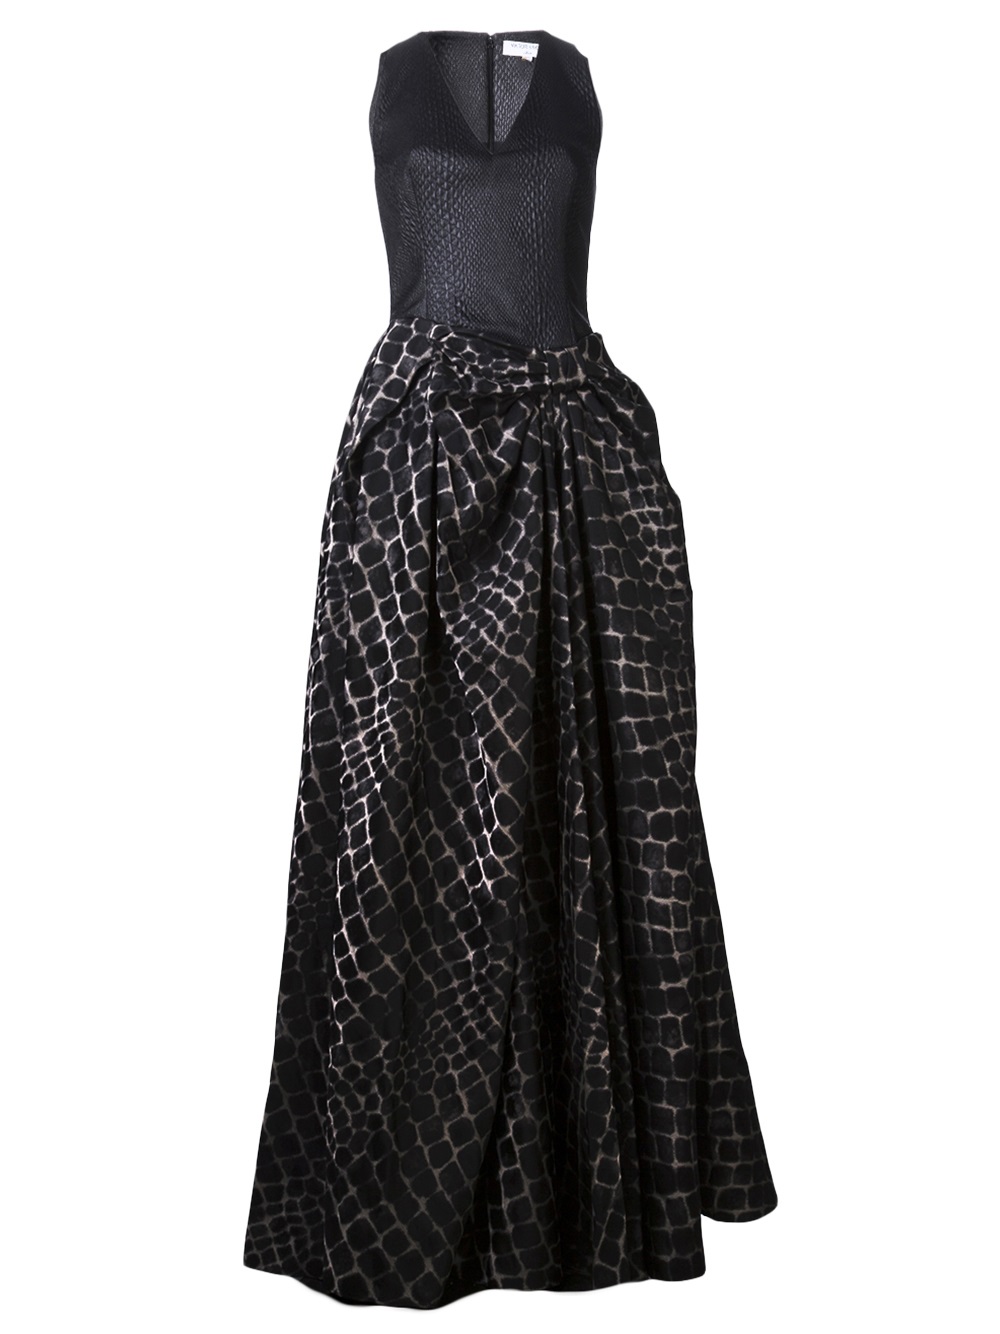 Lyst - Viktor & rolf Crocodile Skin Texture Dress in Black